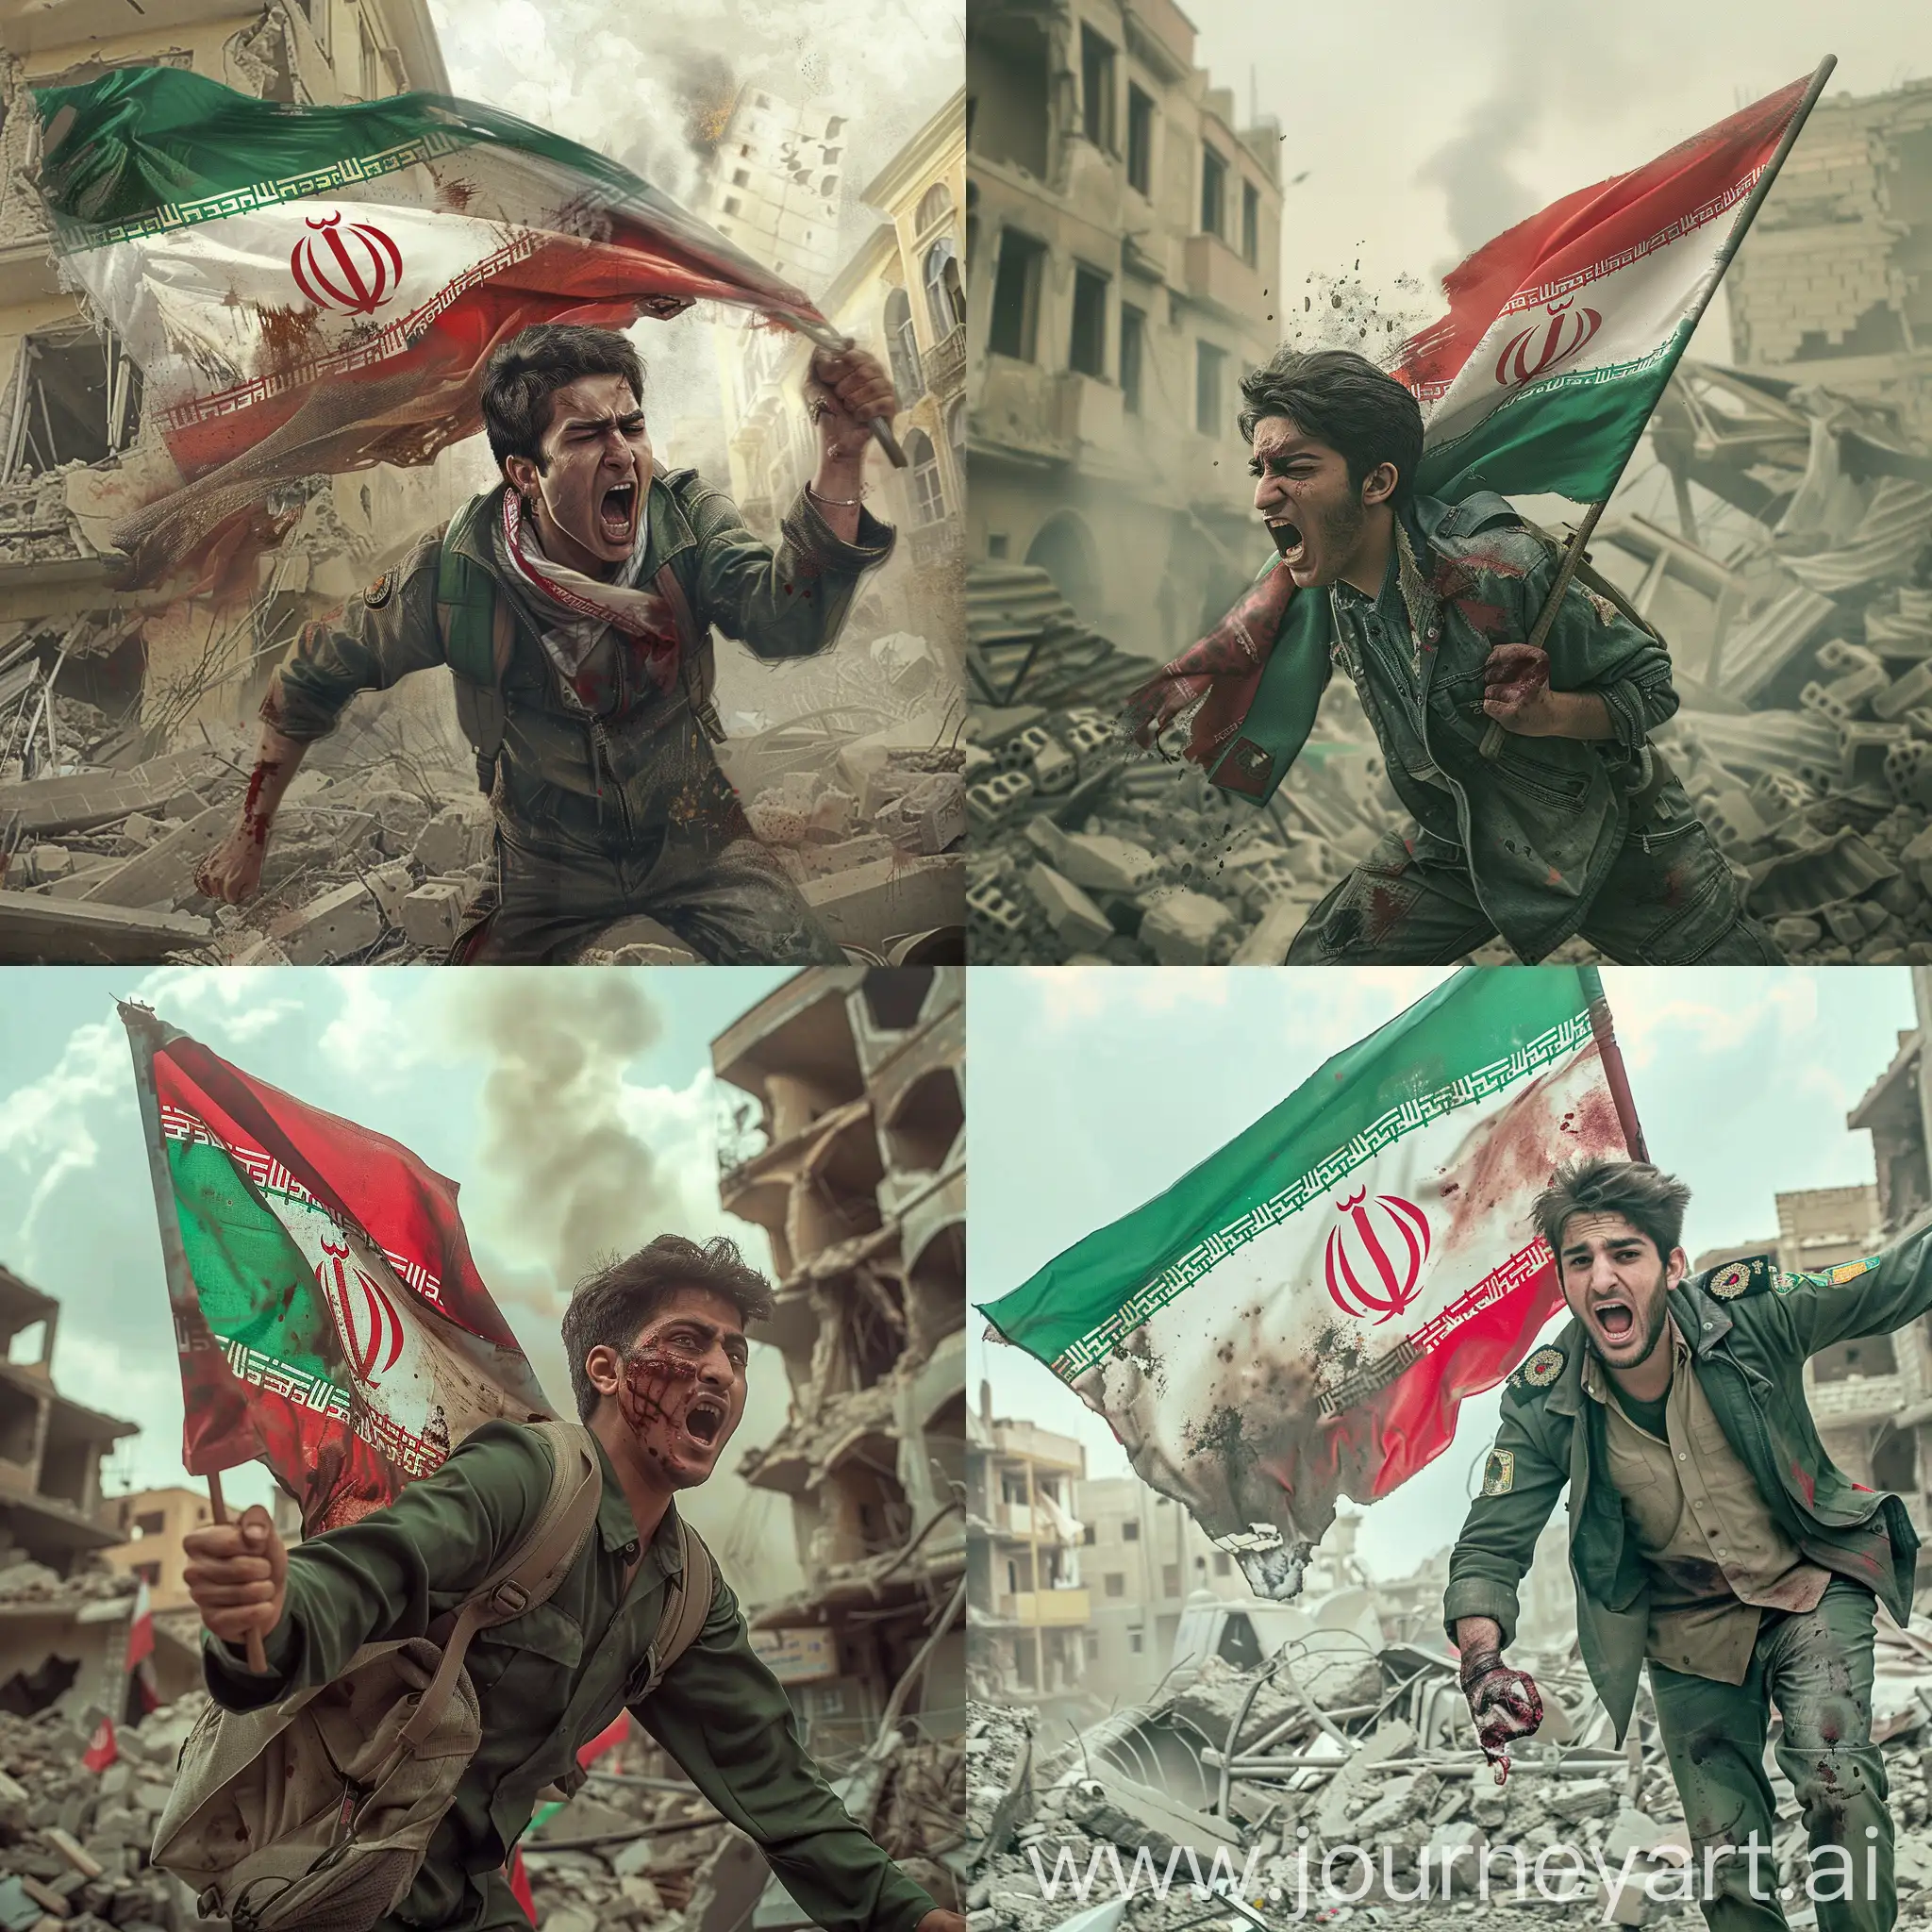 Courageous-Iranian-Patriot-Amidst-Devastation